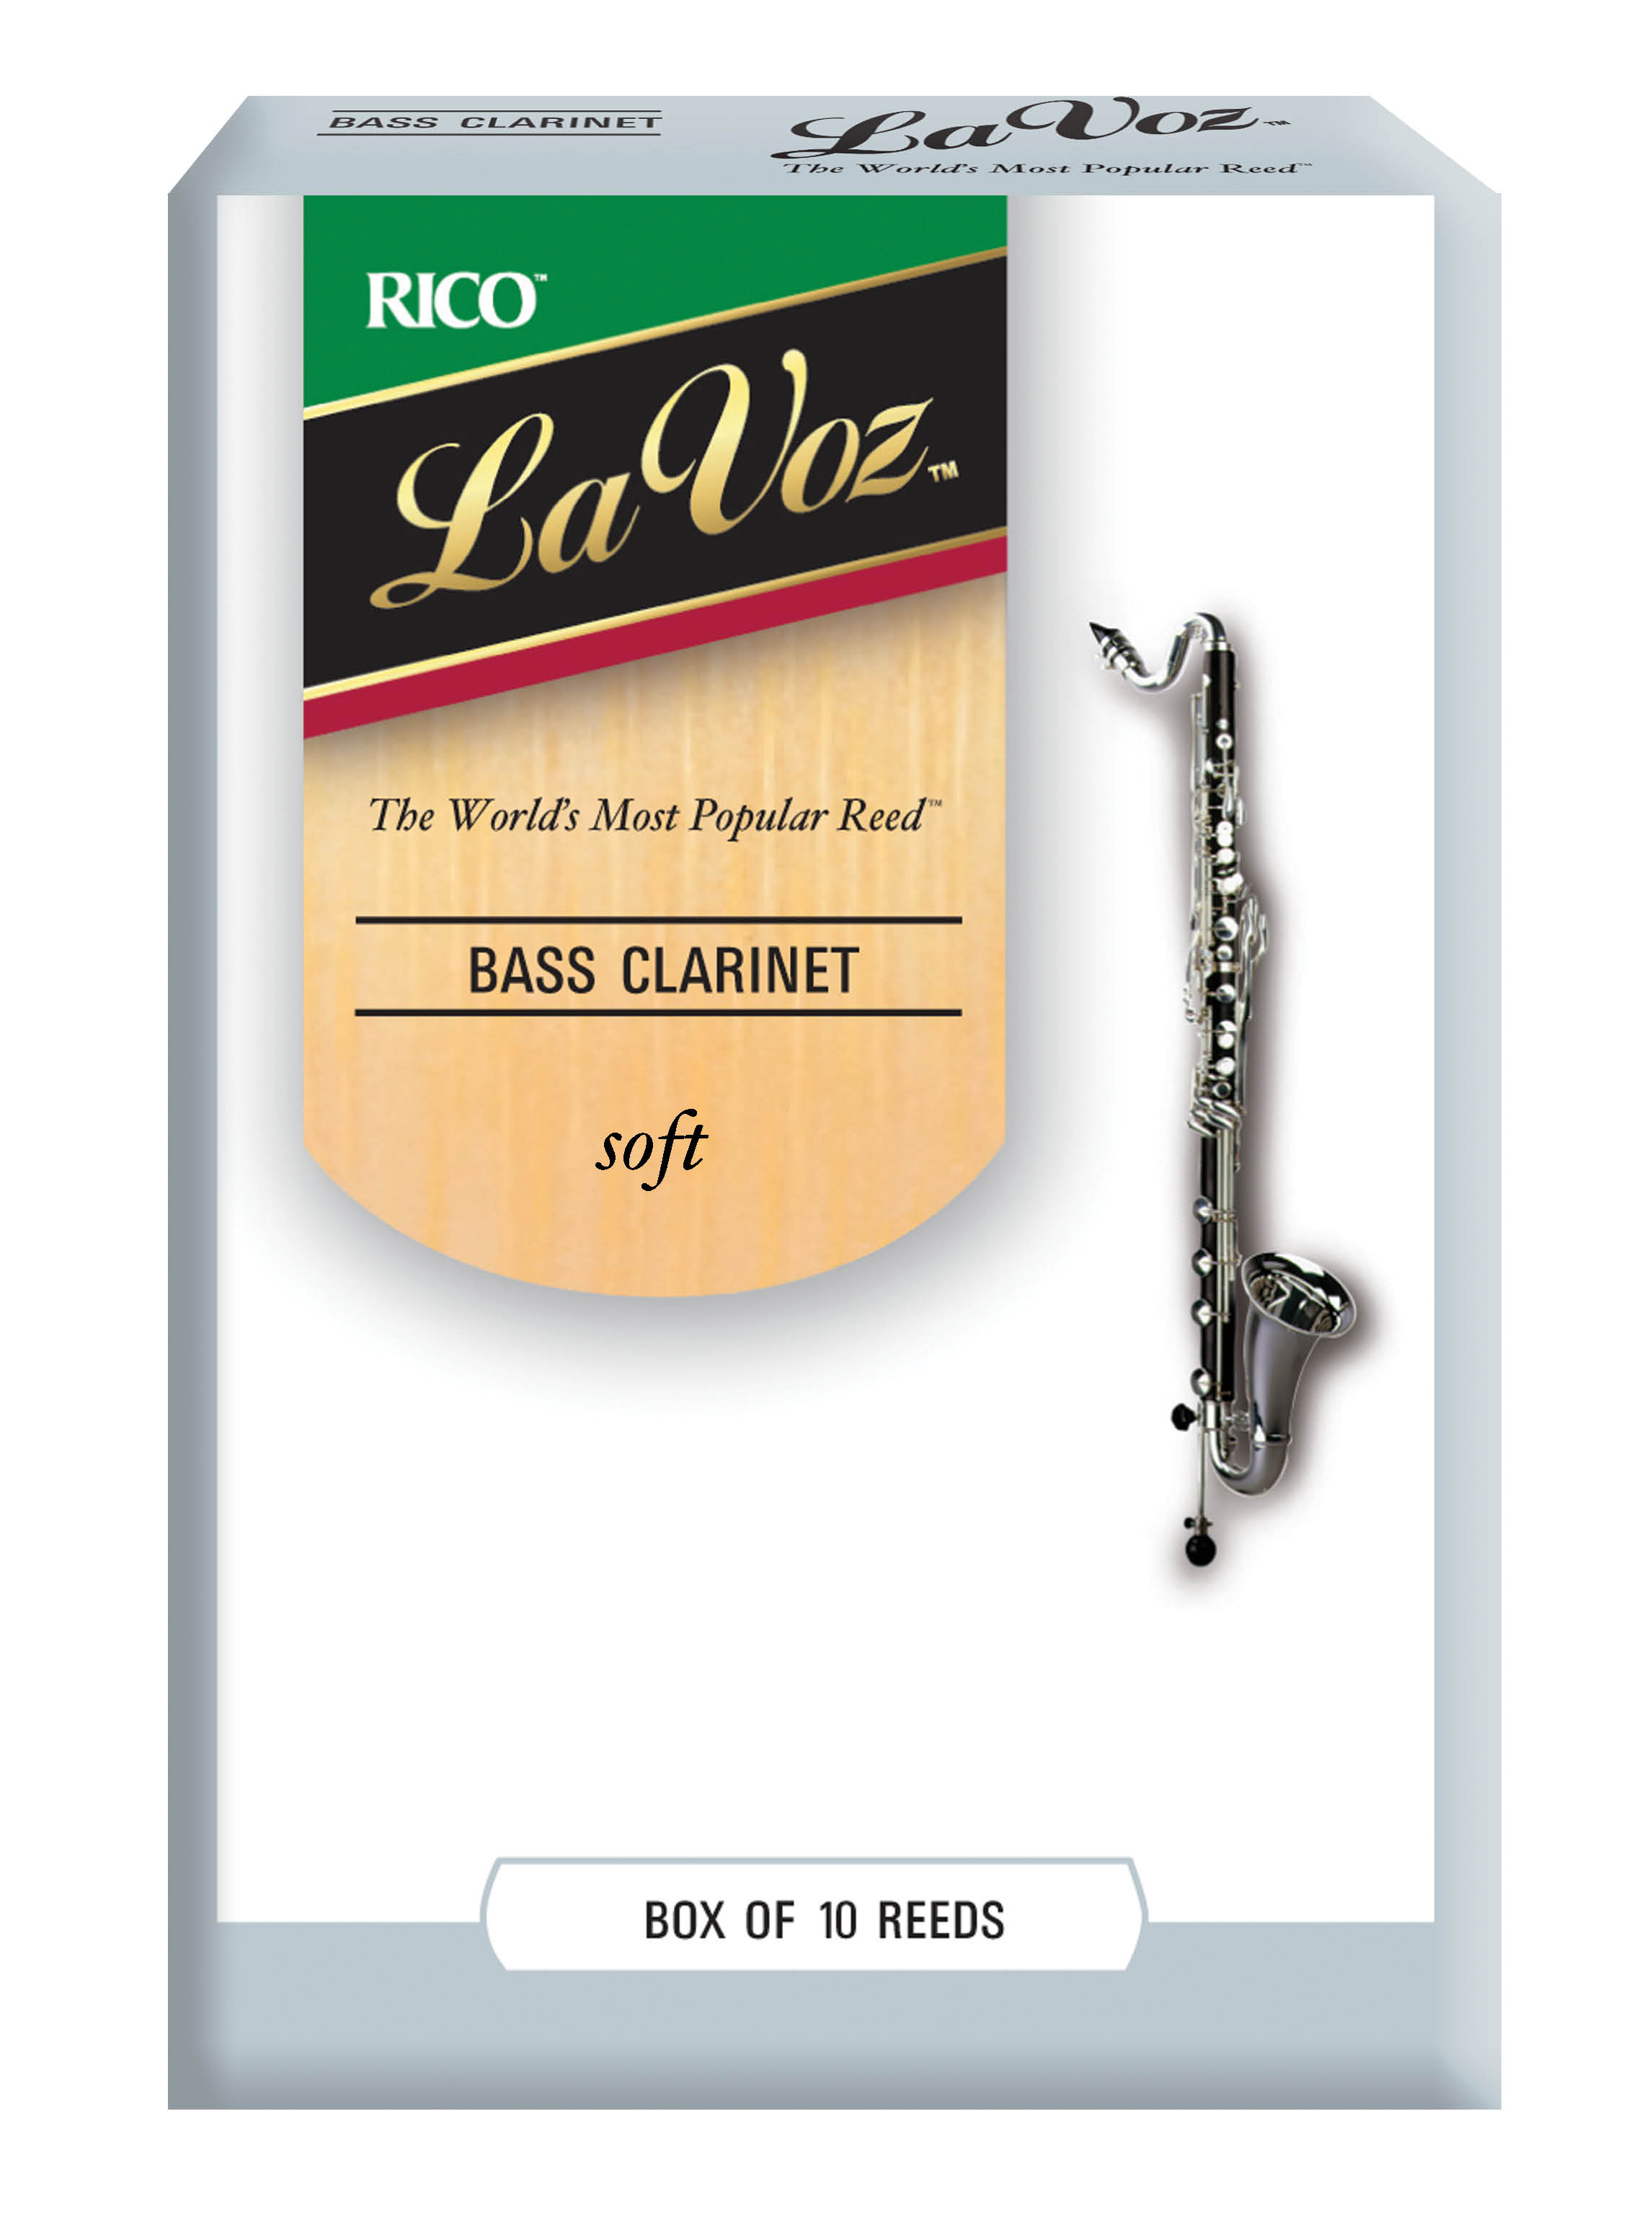 La Voz Bass Clarinet Reeds, Box of 10